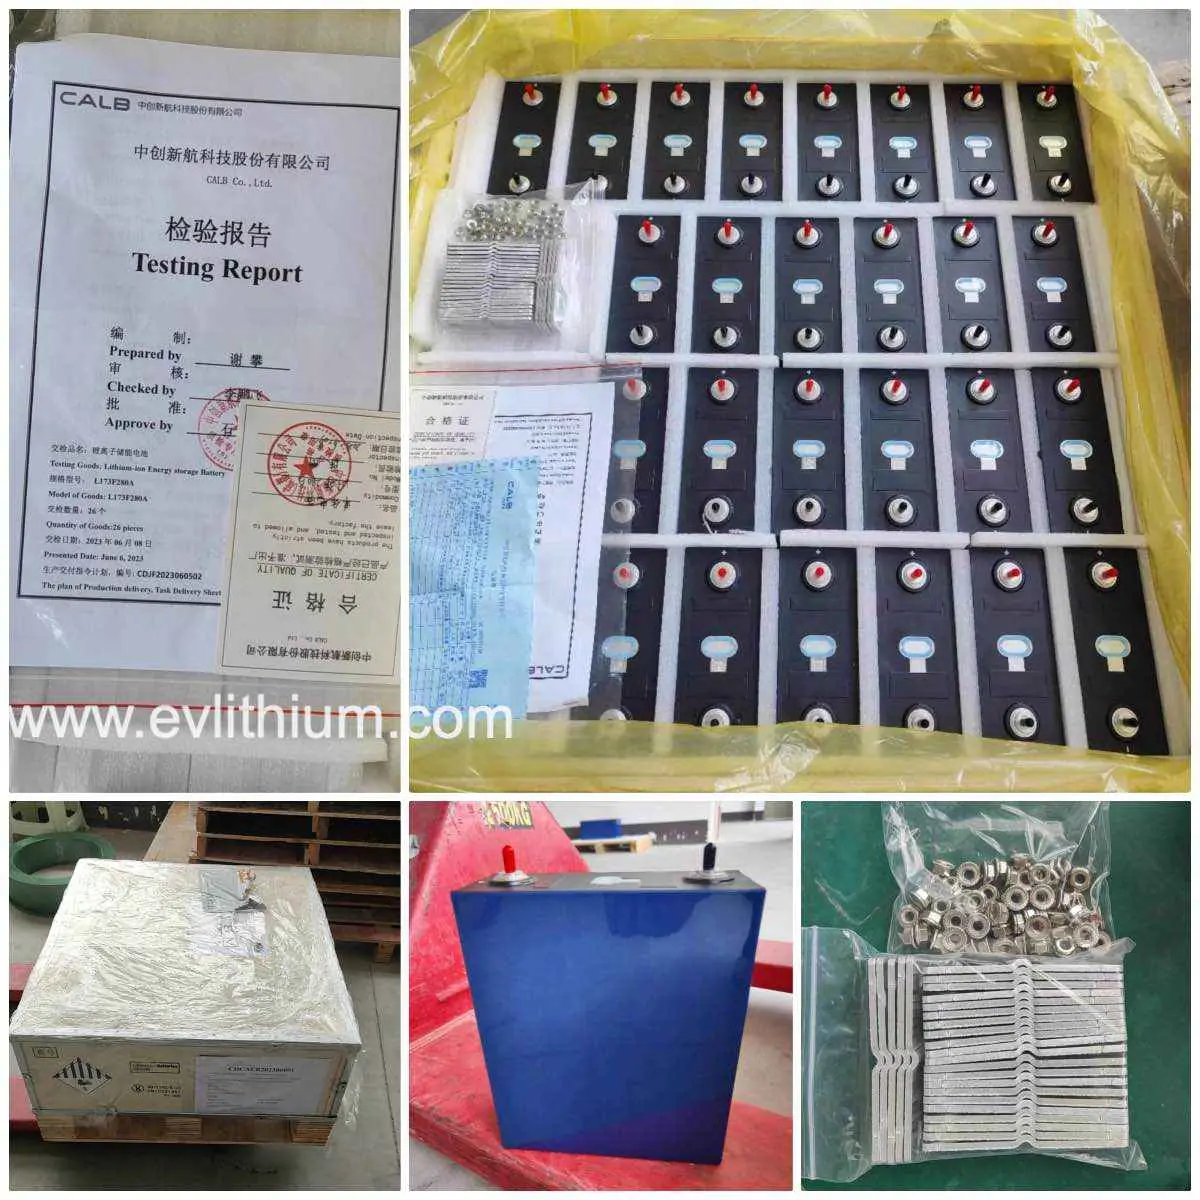 shipment of calb 280ah lifepo4 battery cells